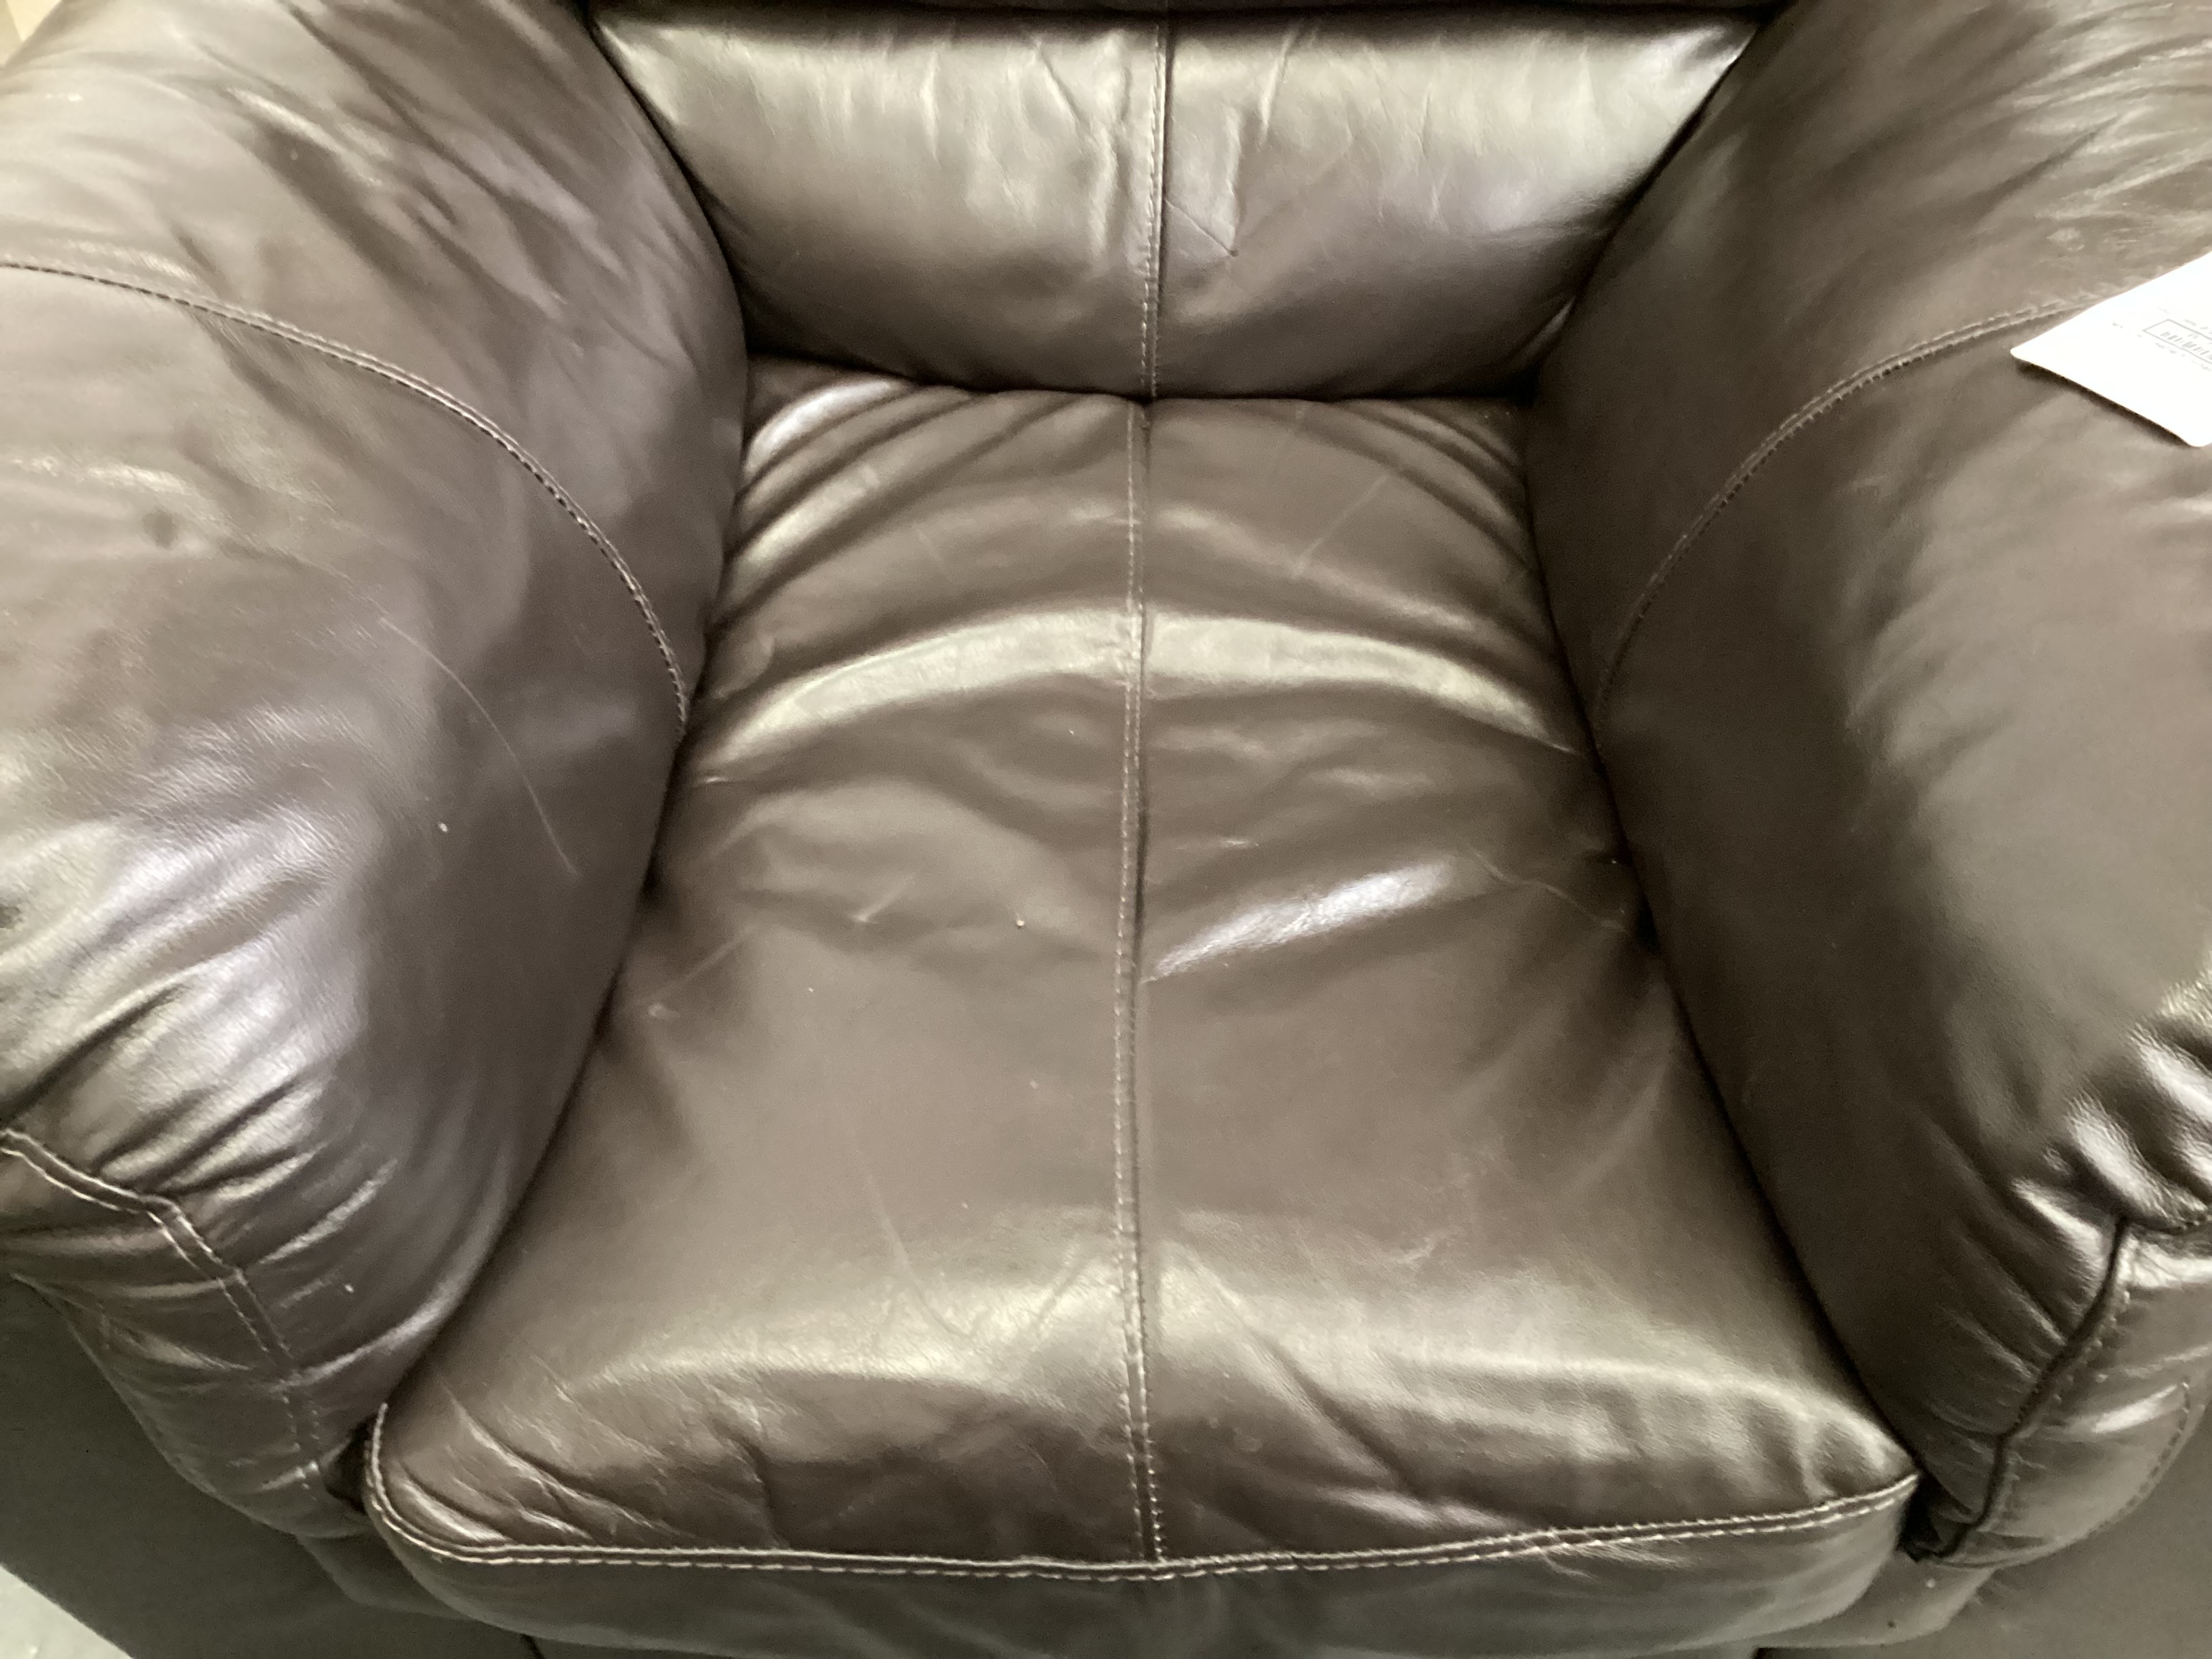 Dark Brown Leather Armchair